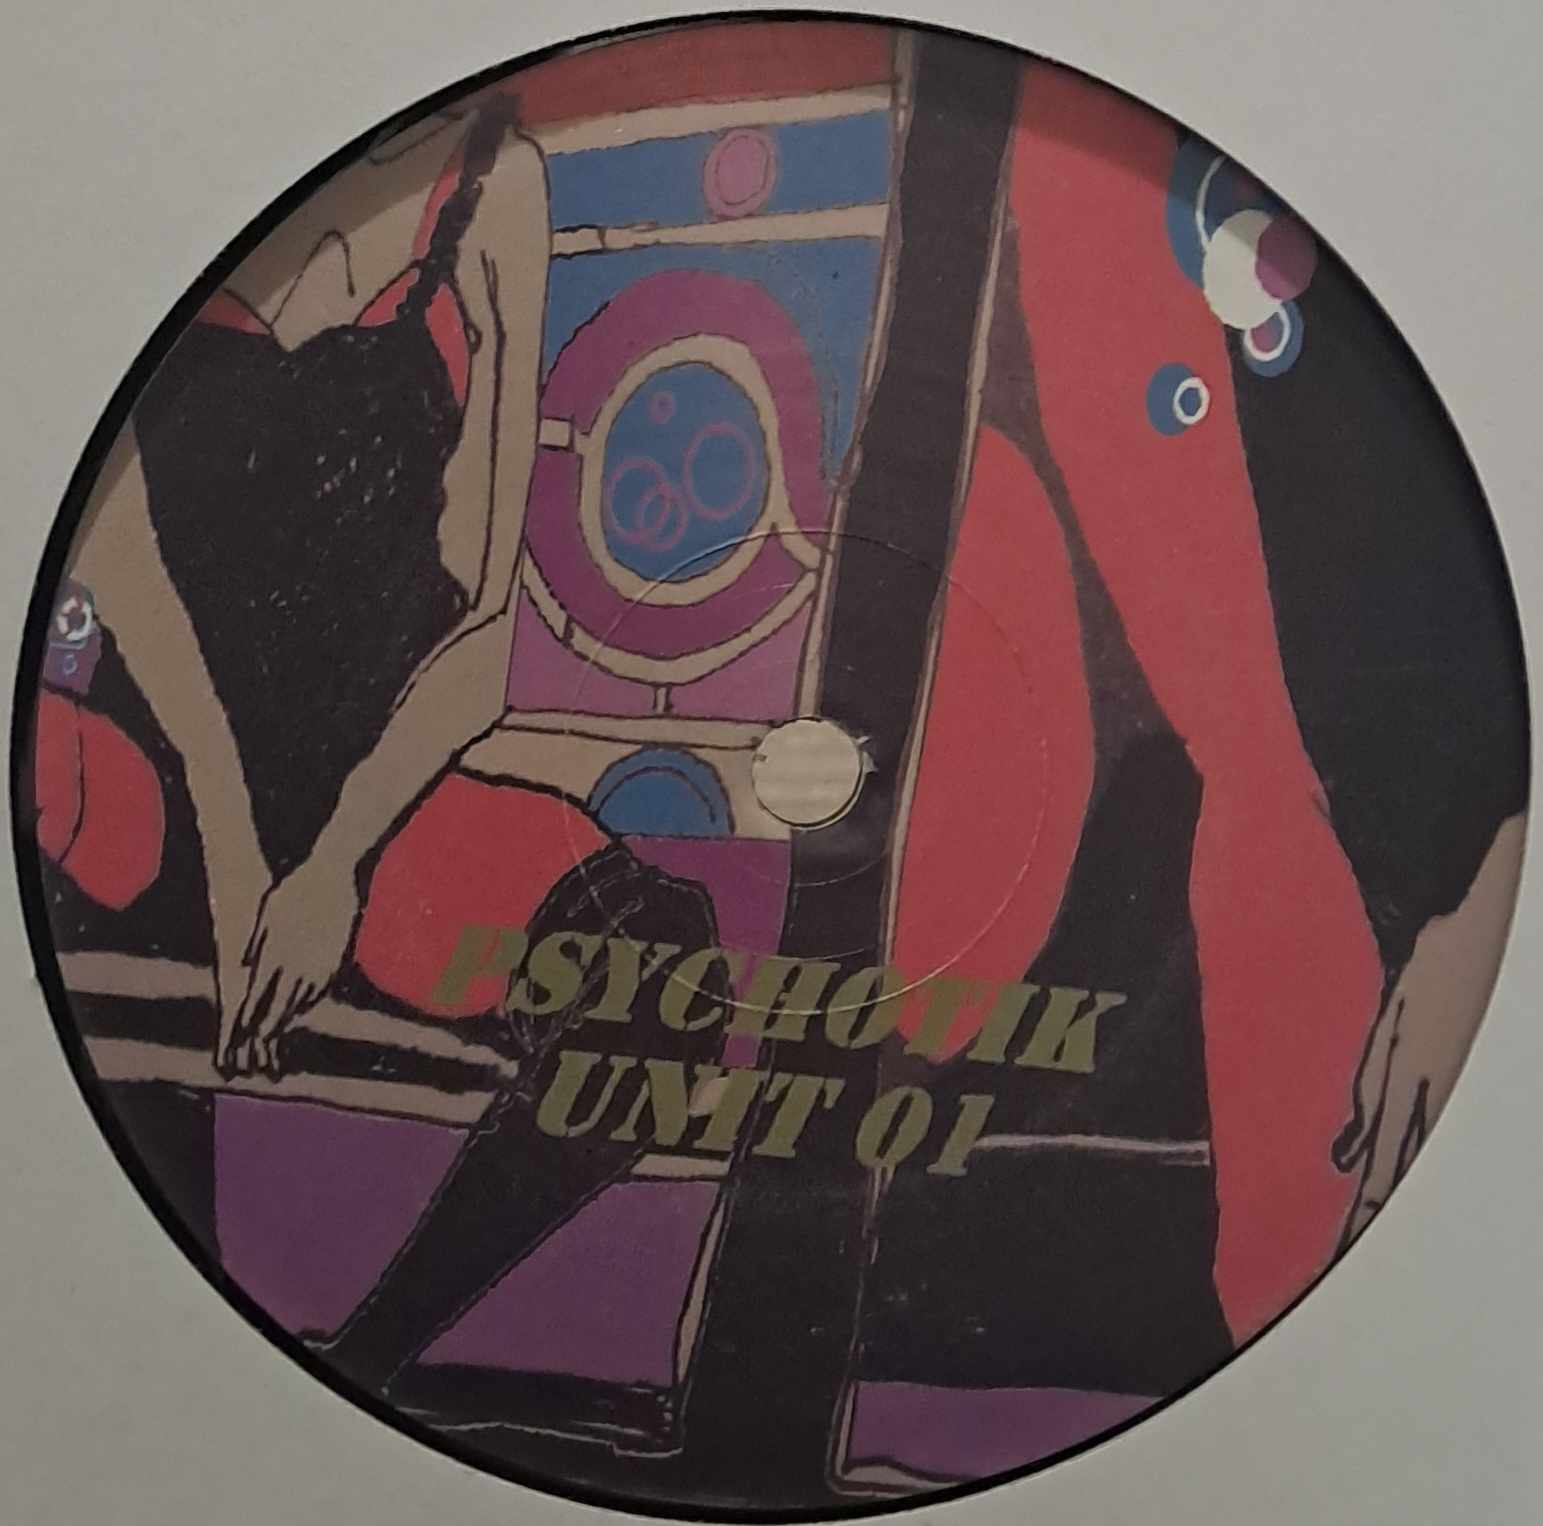 Psychotik Unit 01 - vinyle freetekno